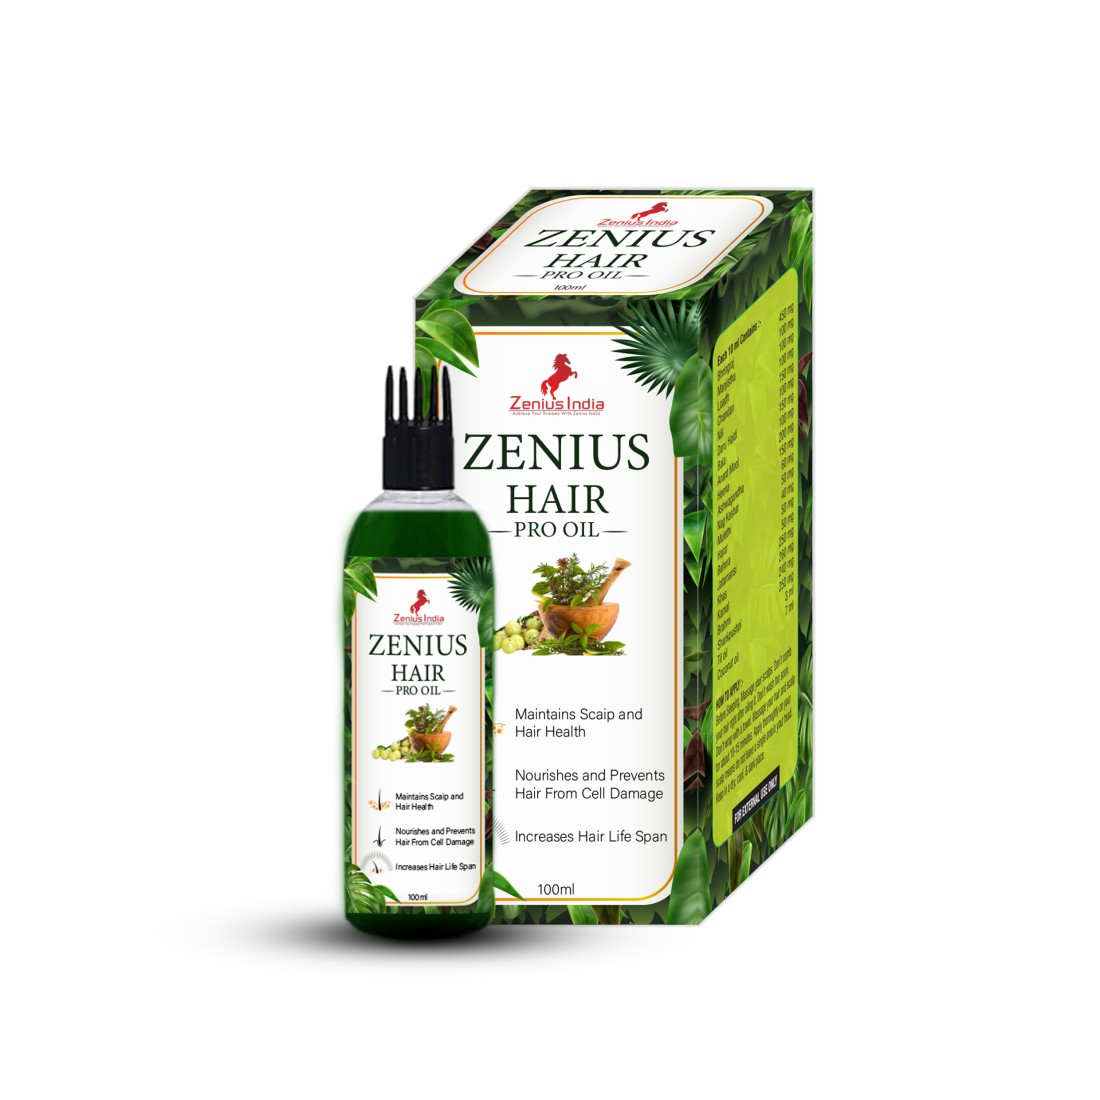 Buy Zenius Hair Pro Oil at Best Price Online